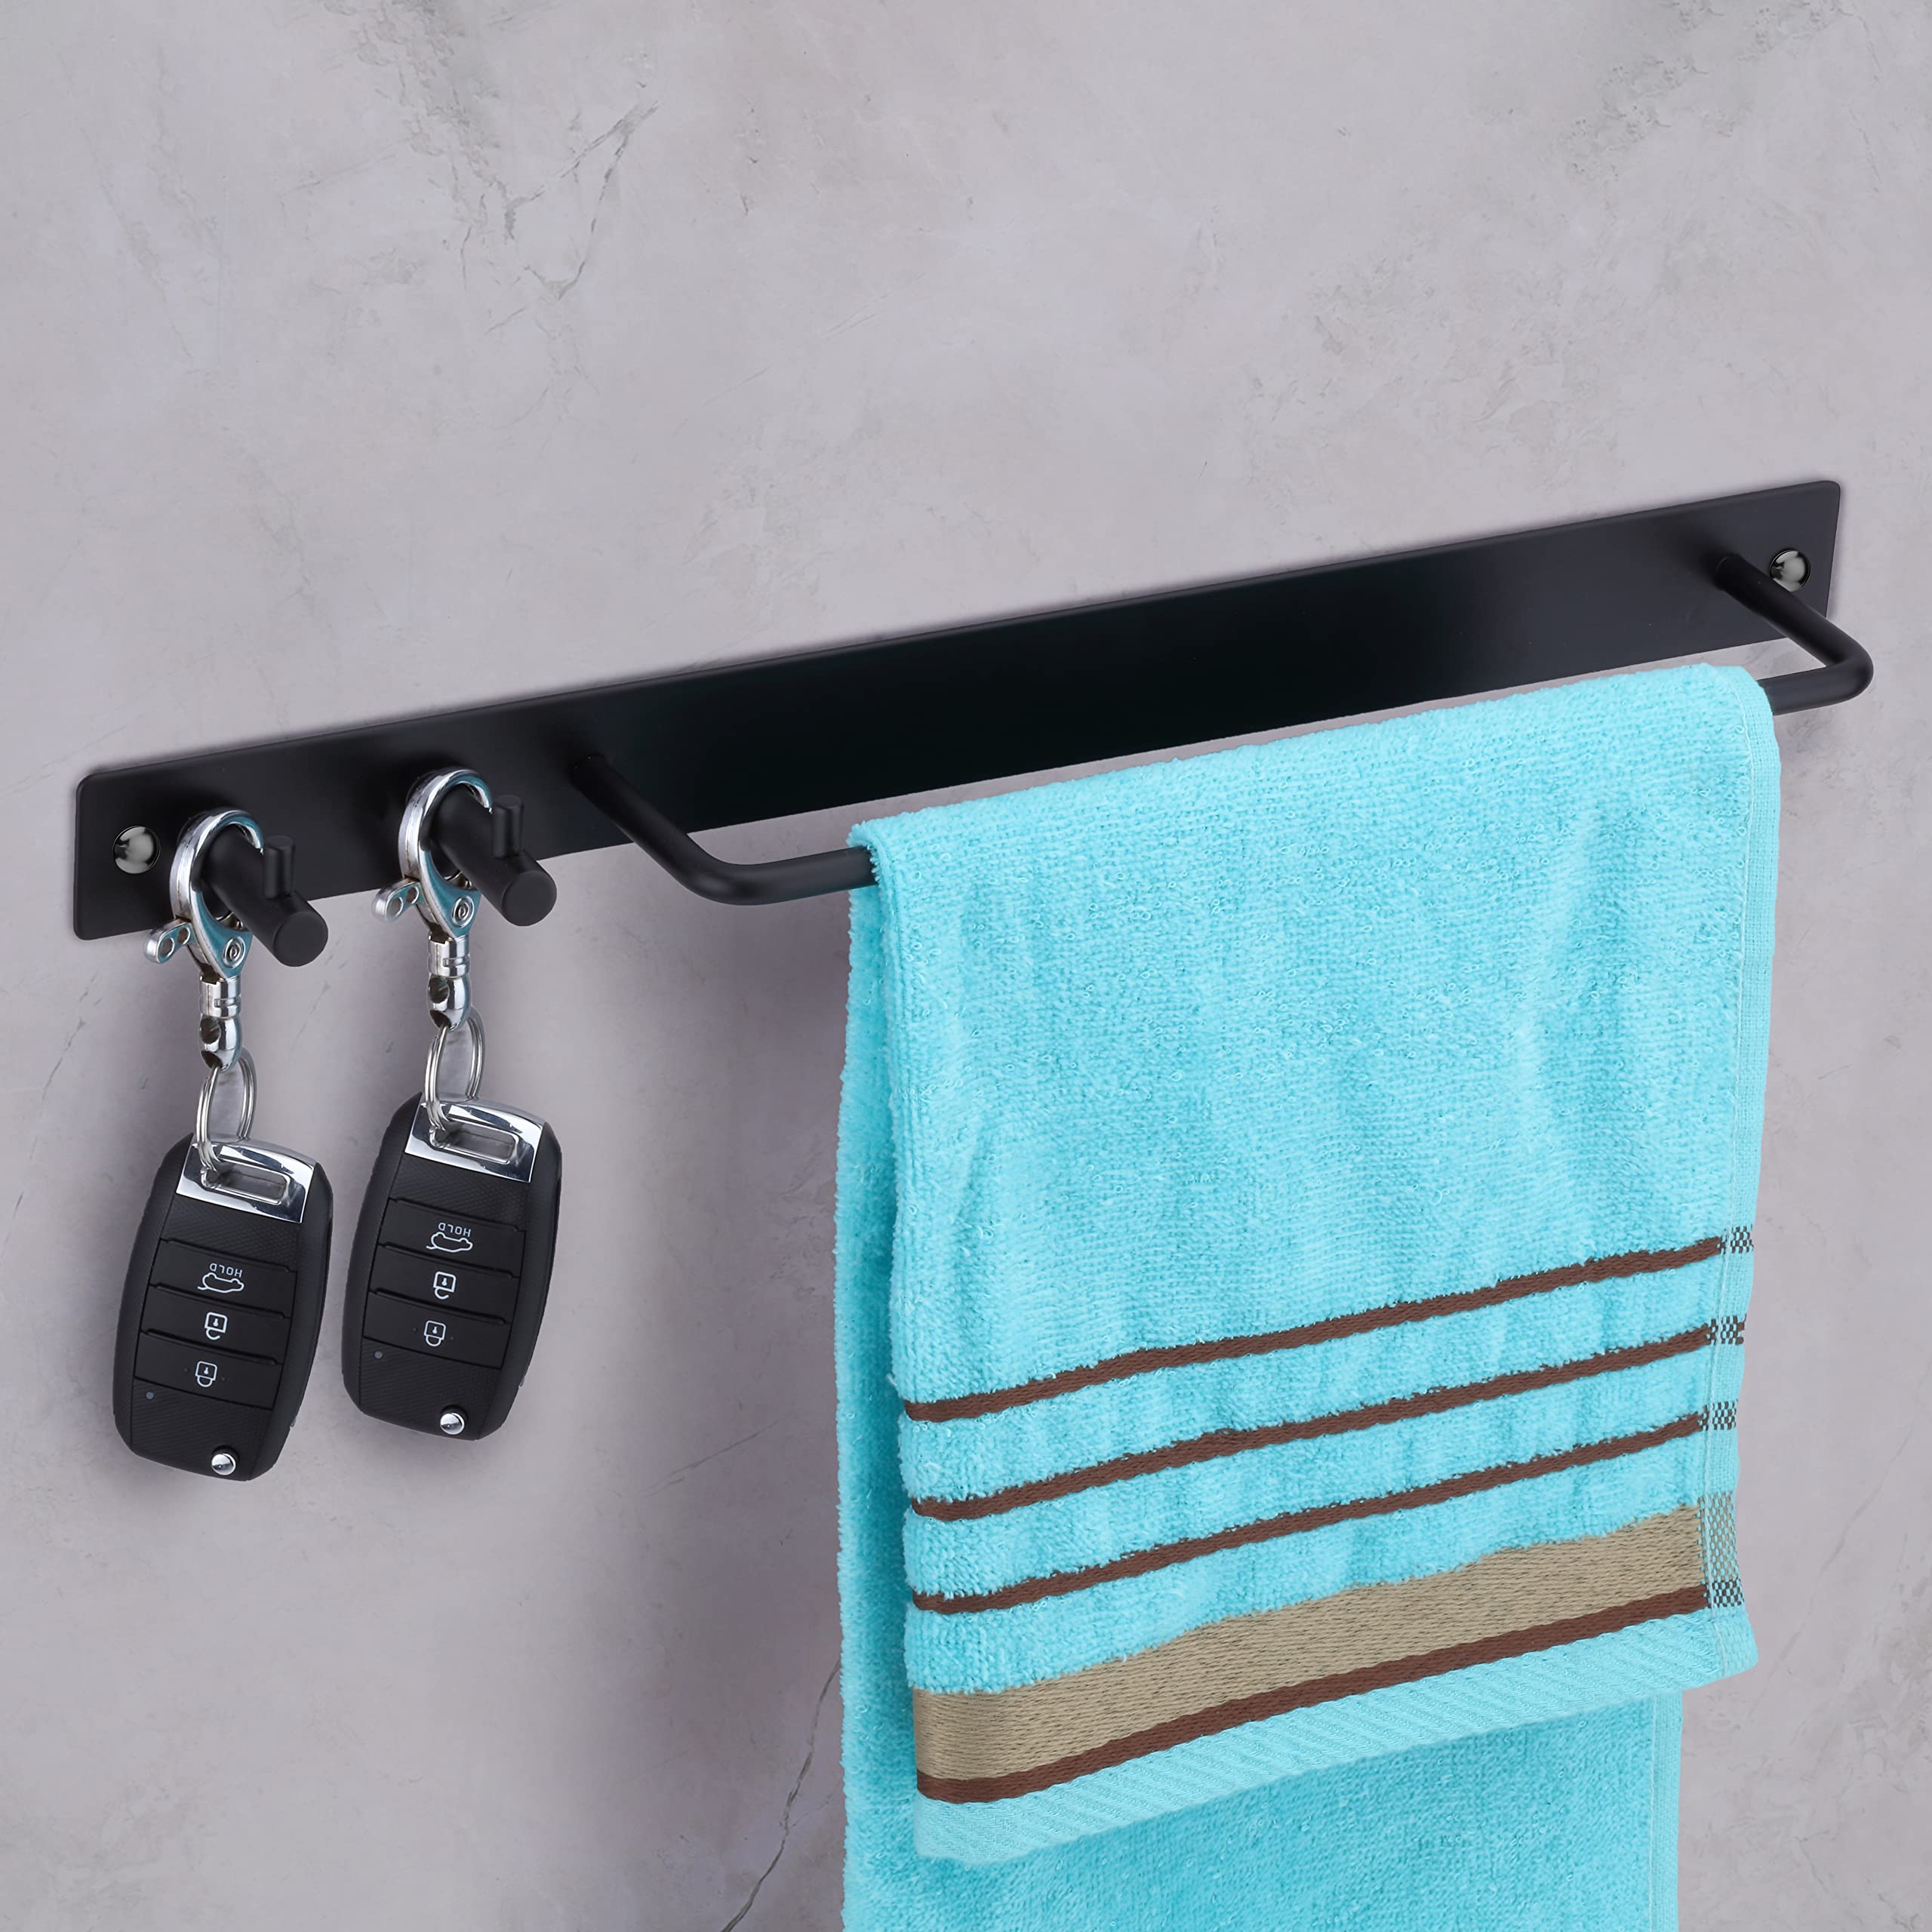 Plantex Stainless Steel Towel Stand/Towel Rod with Hook for Bathroom/Hanger/Bathroom Accessories - Powder Coated Finish (Matt Black)